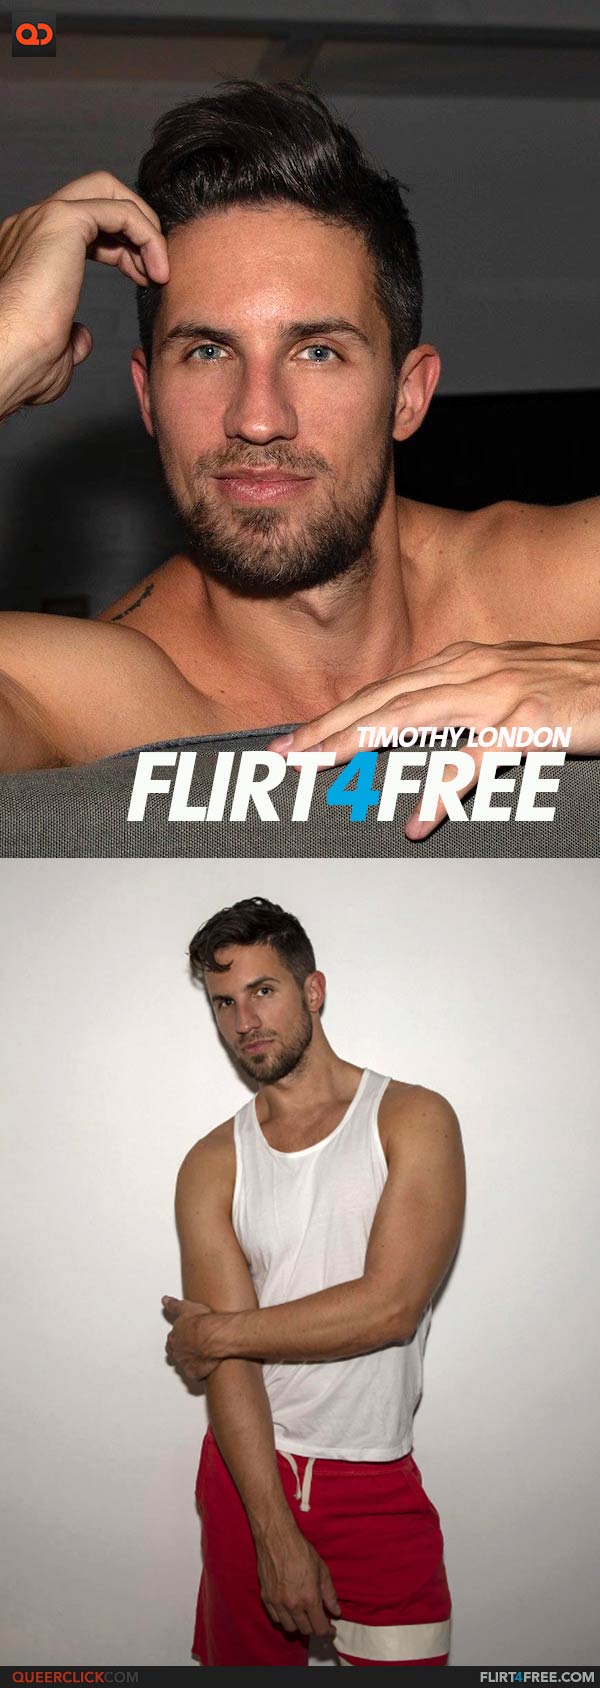 Flirt4Free: Timothy London